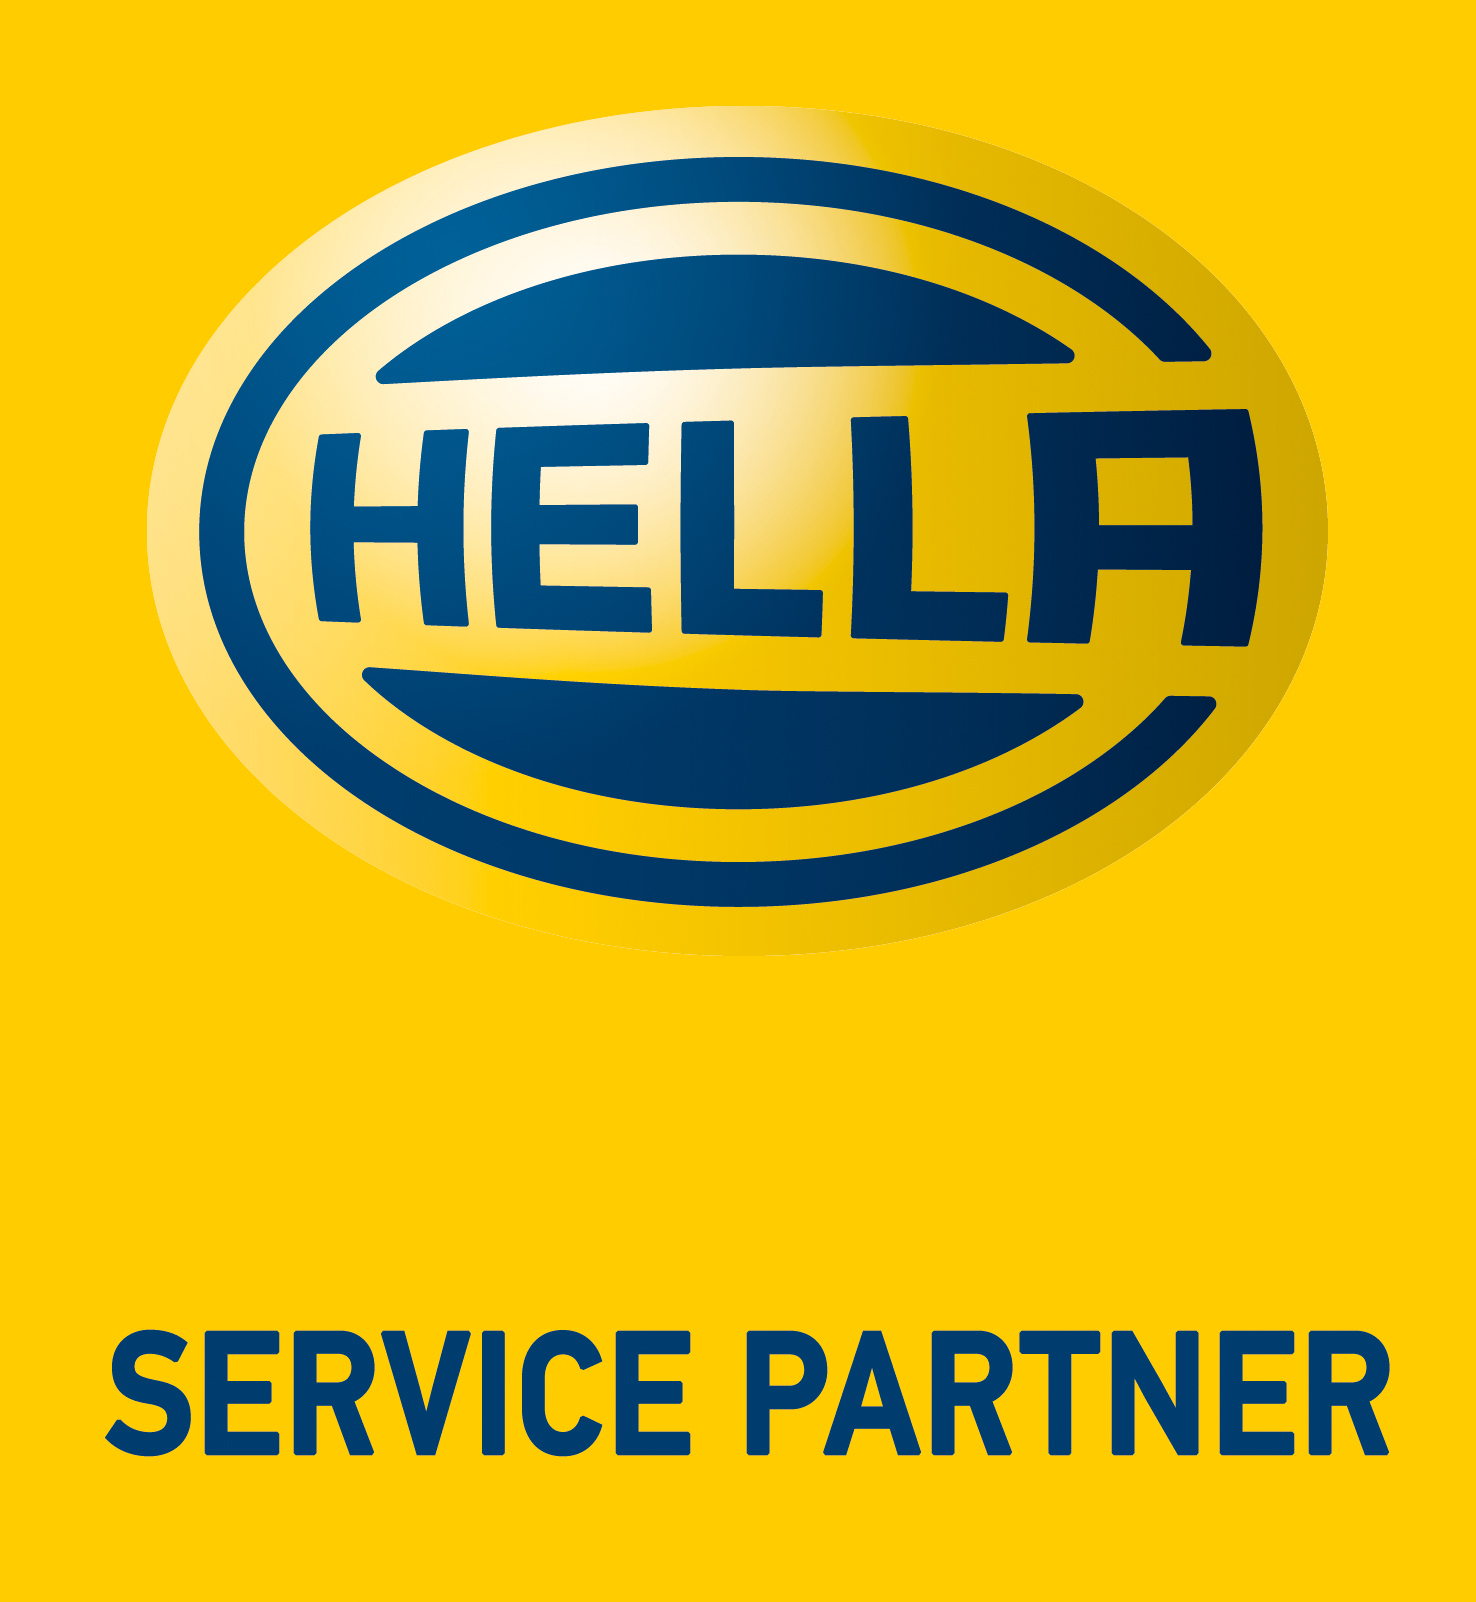 Center Auto ApS - Hella Service Partner logo